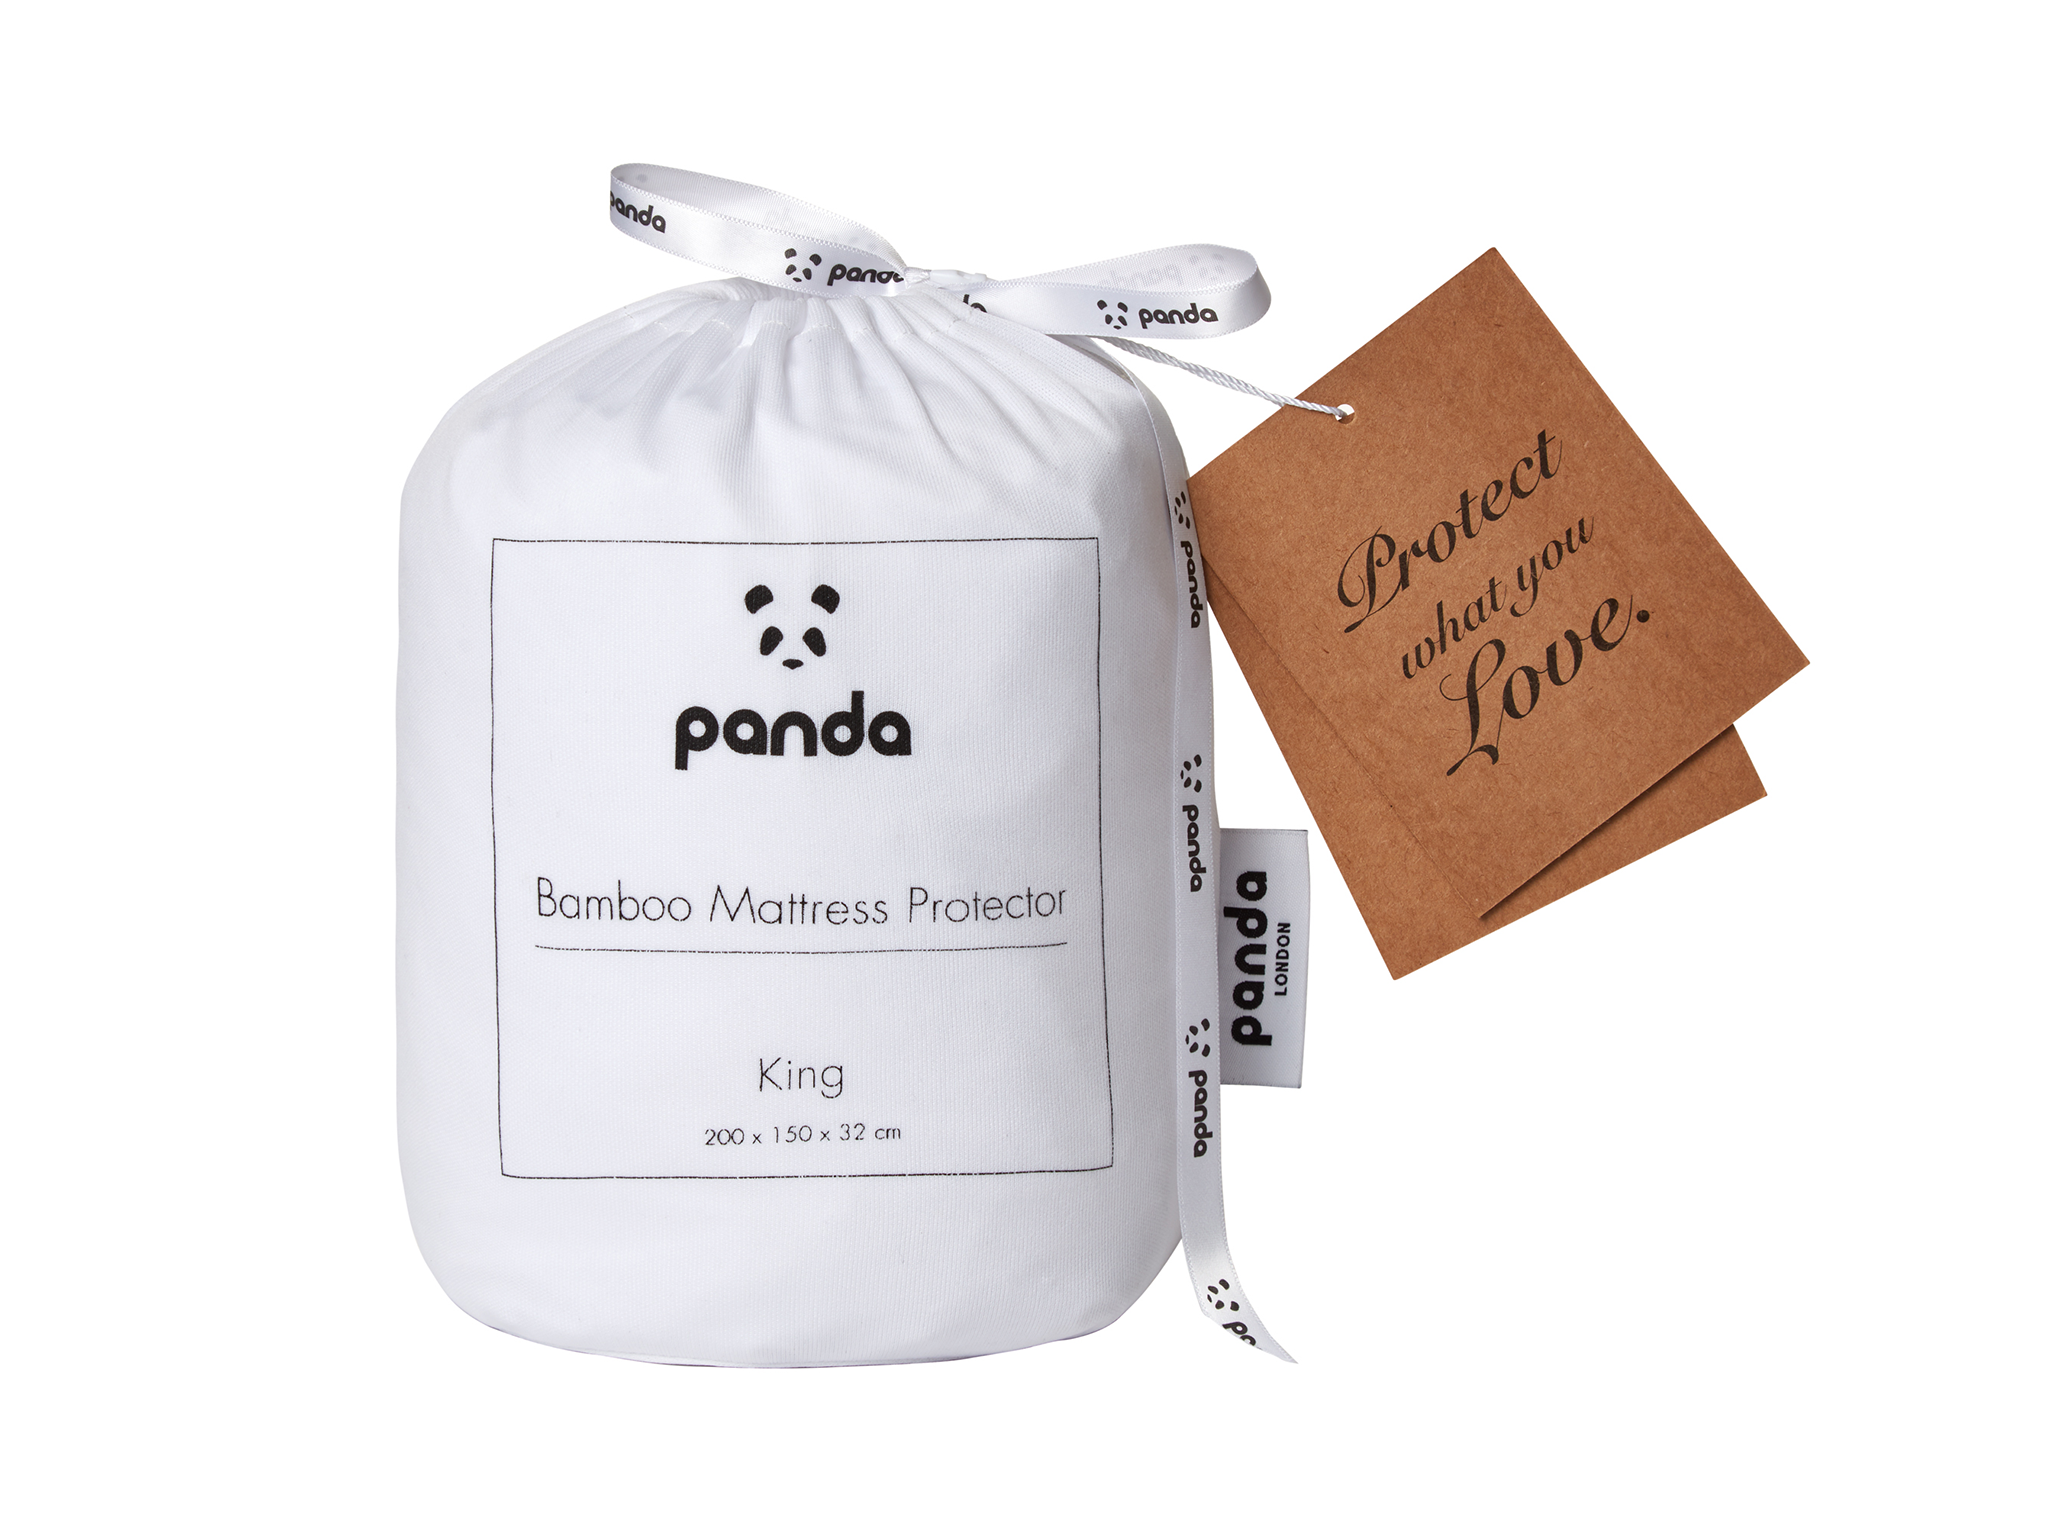 Panda bamboo mattress protector.png